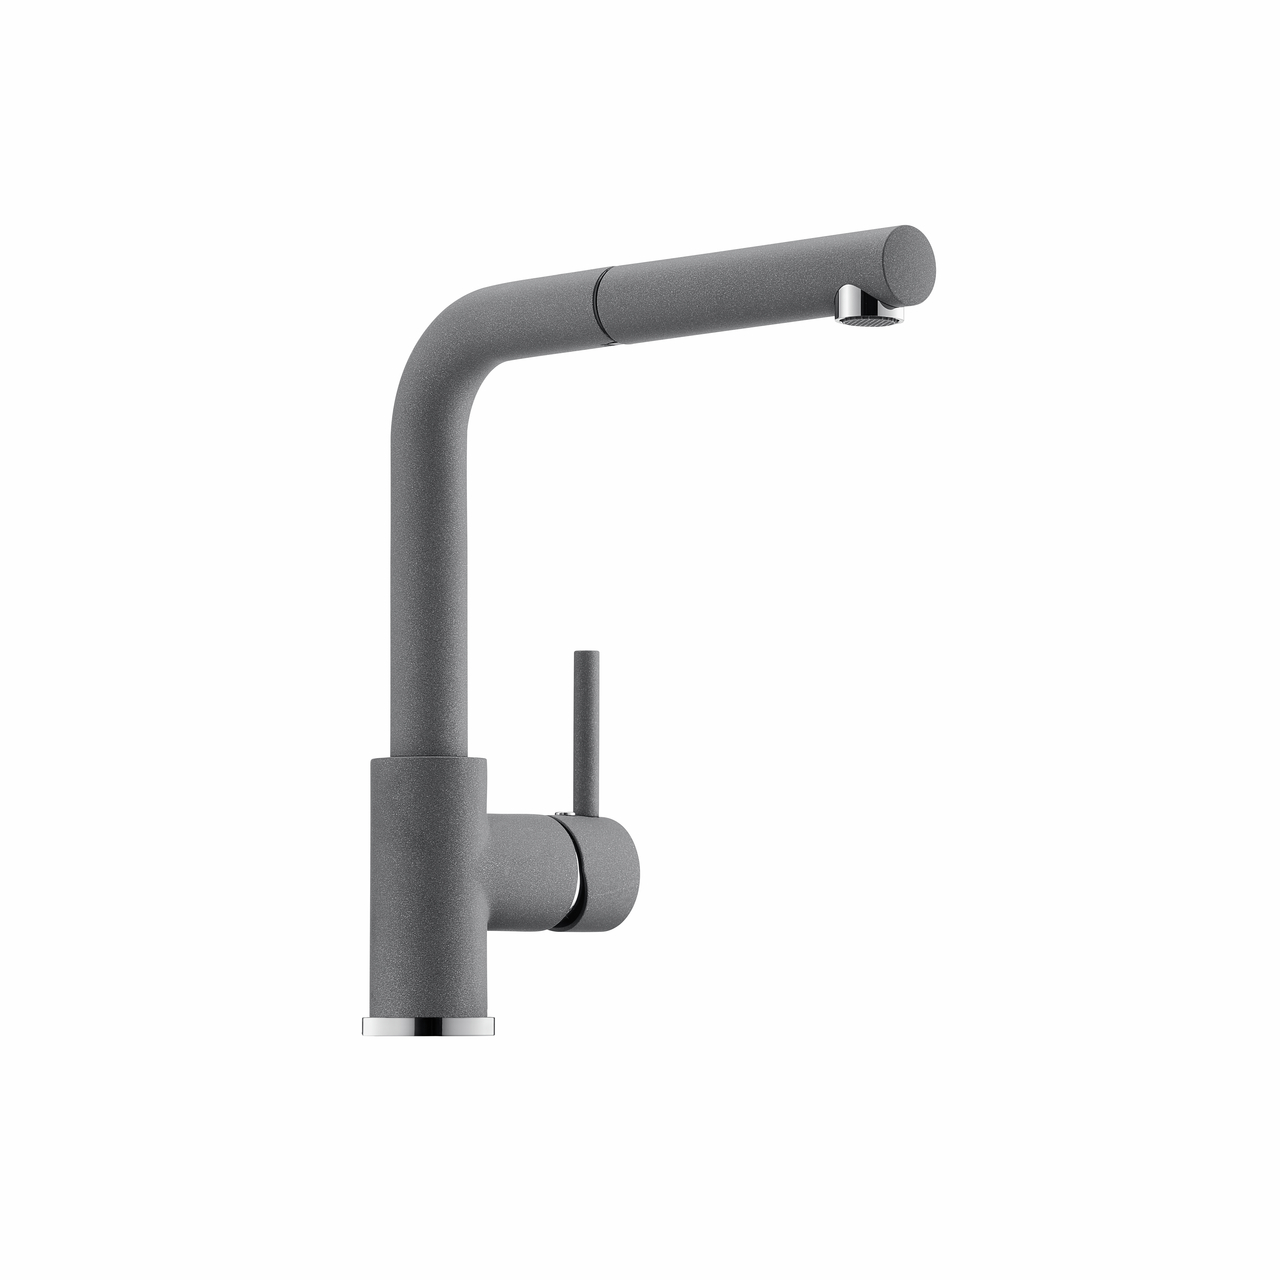 LINEA Gramix 2 high pressure faucet, granite metallico